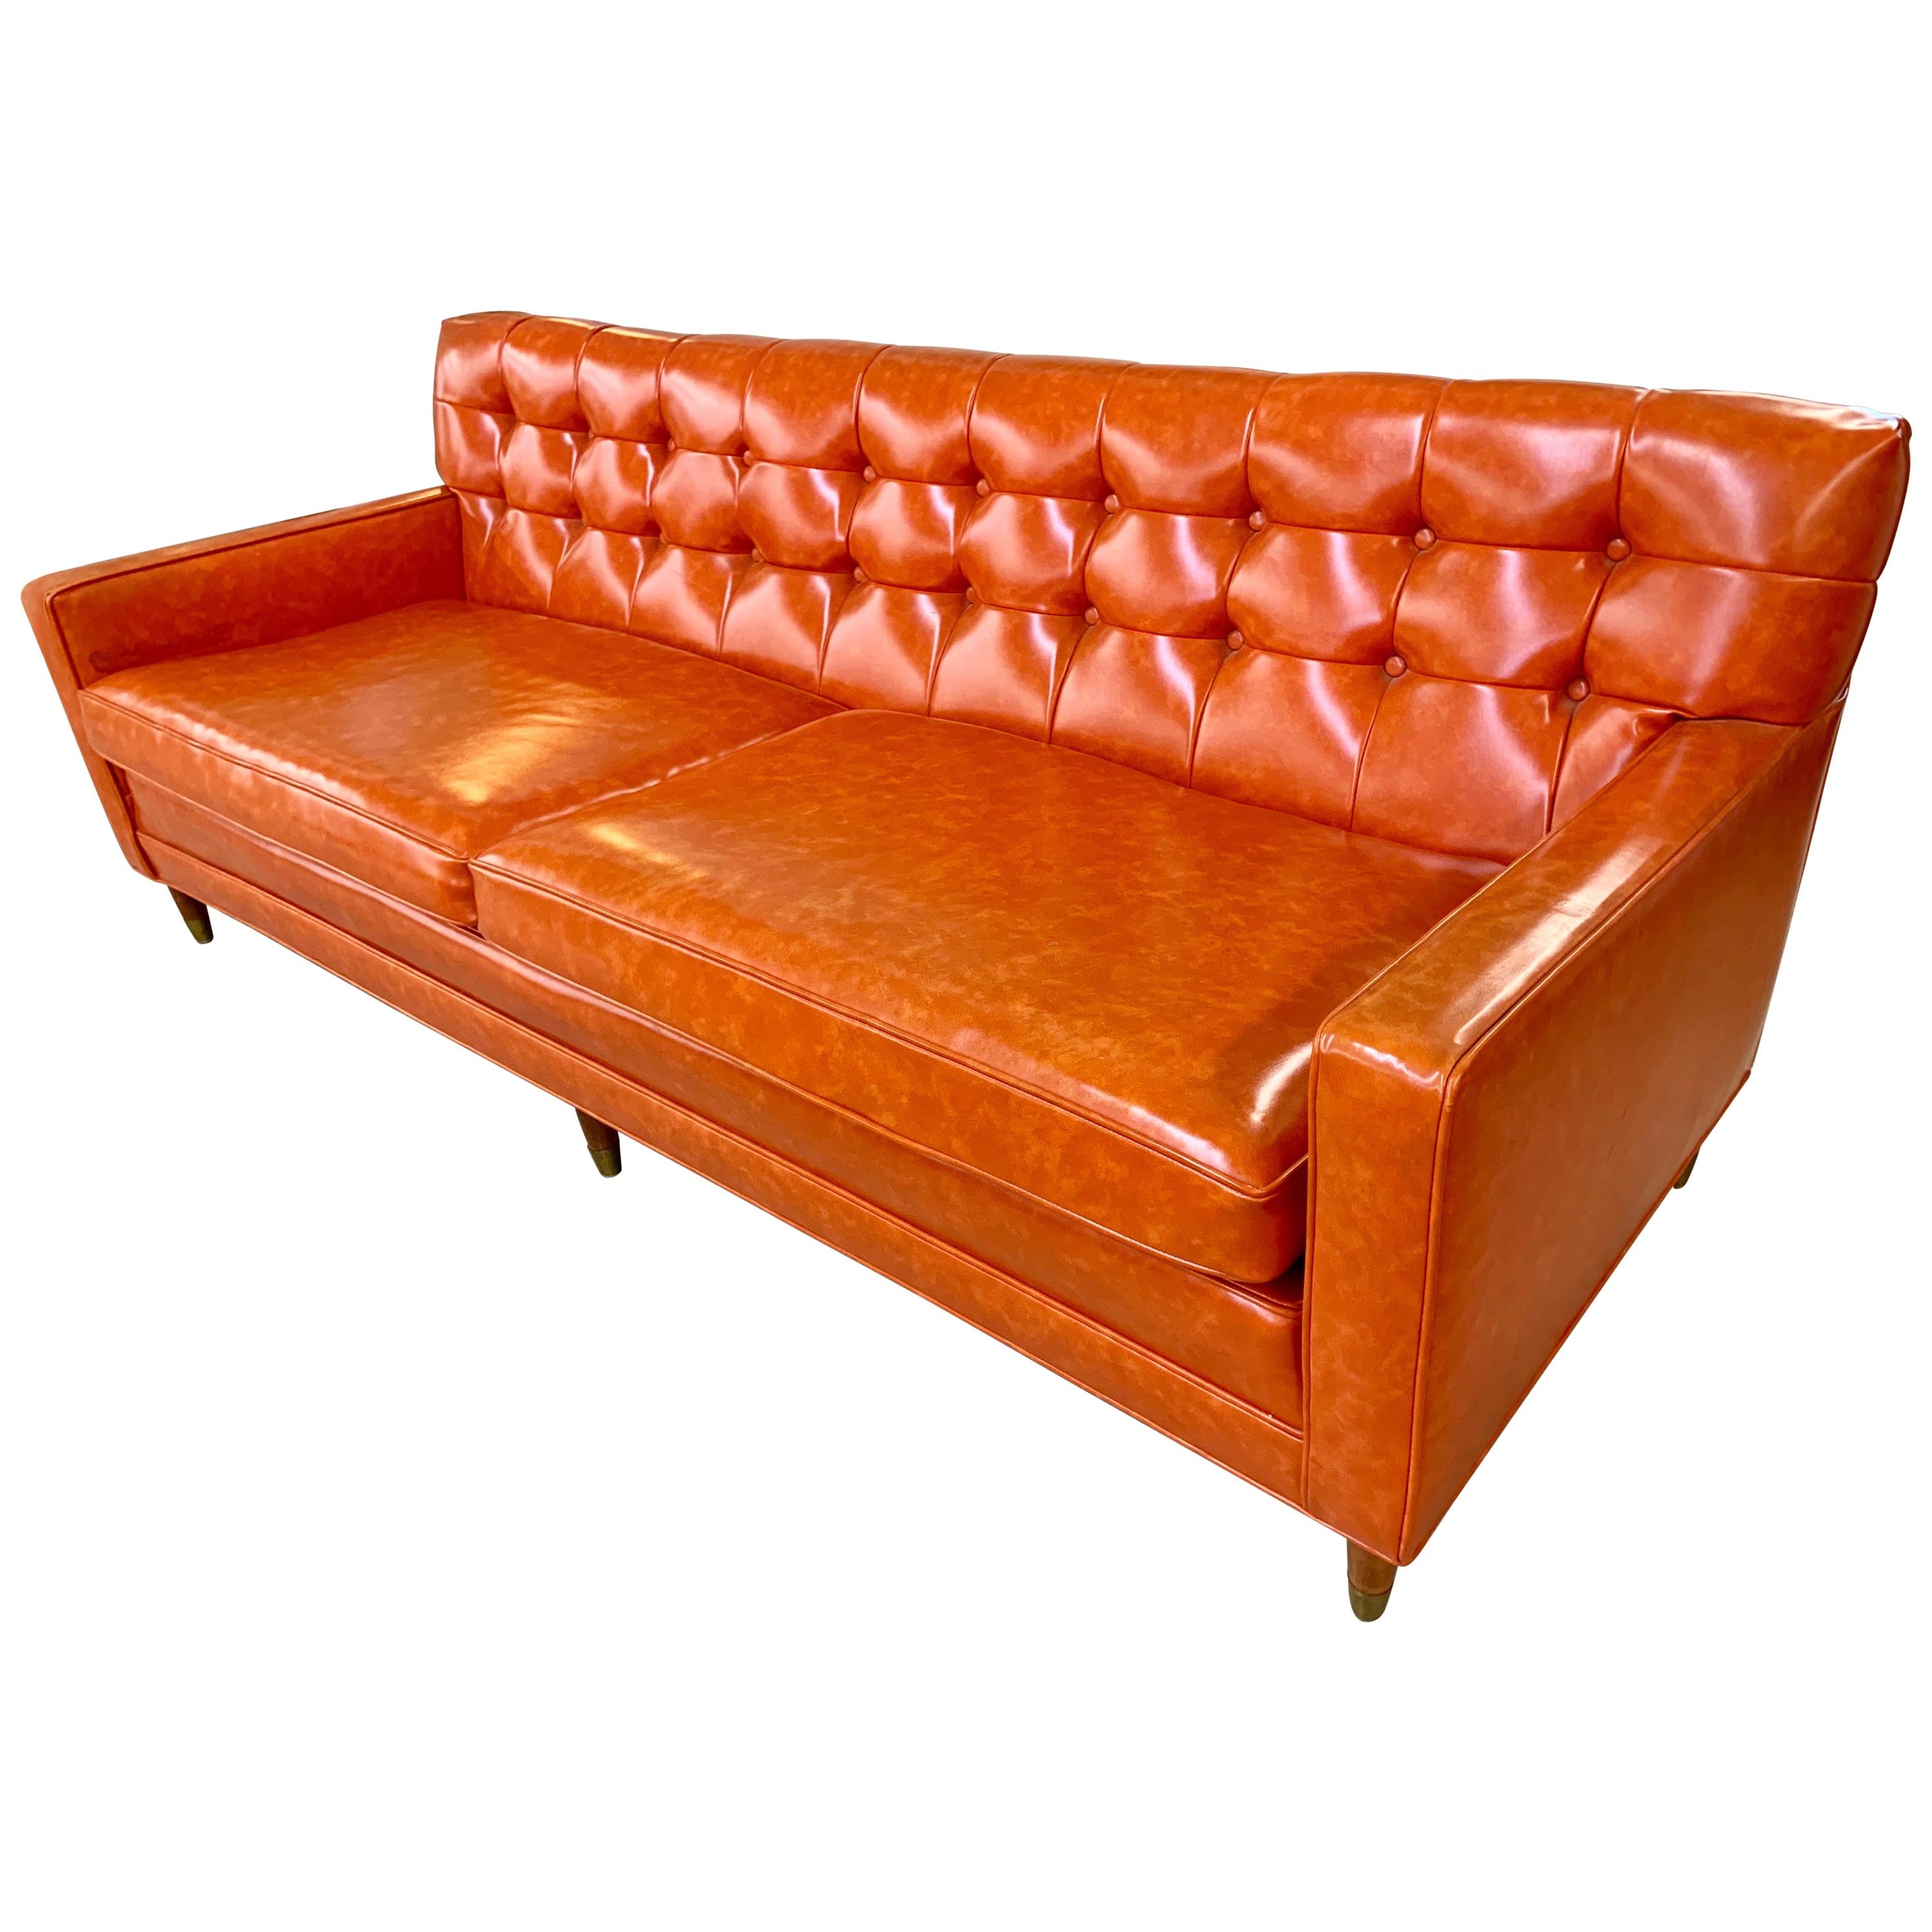 Mid-Century Modern Orange Tufted Chesterfield Sofa